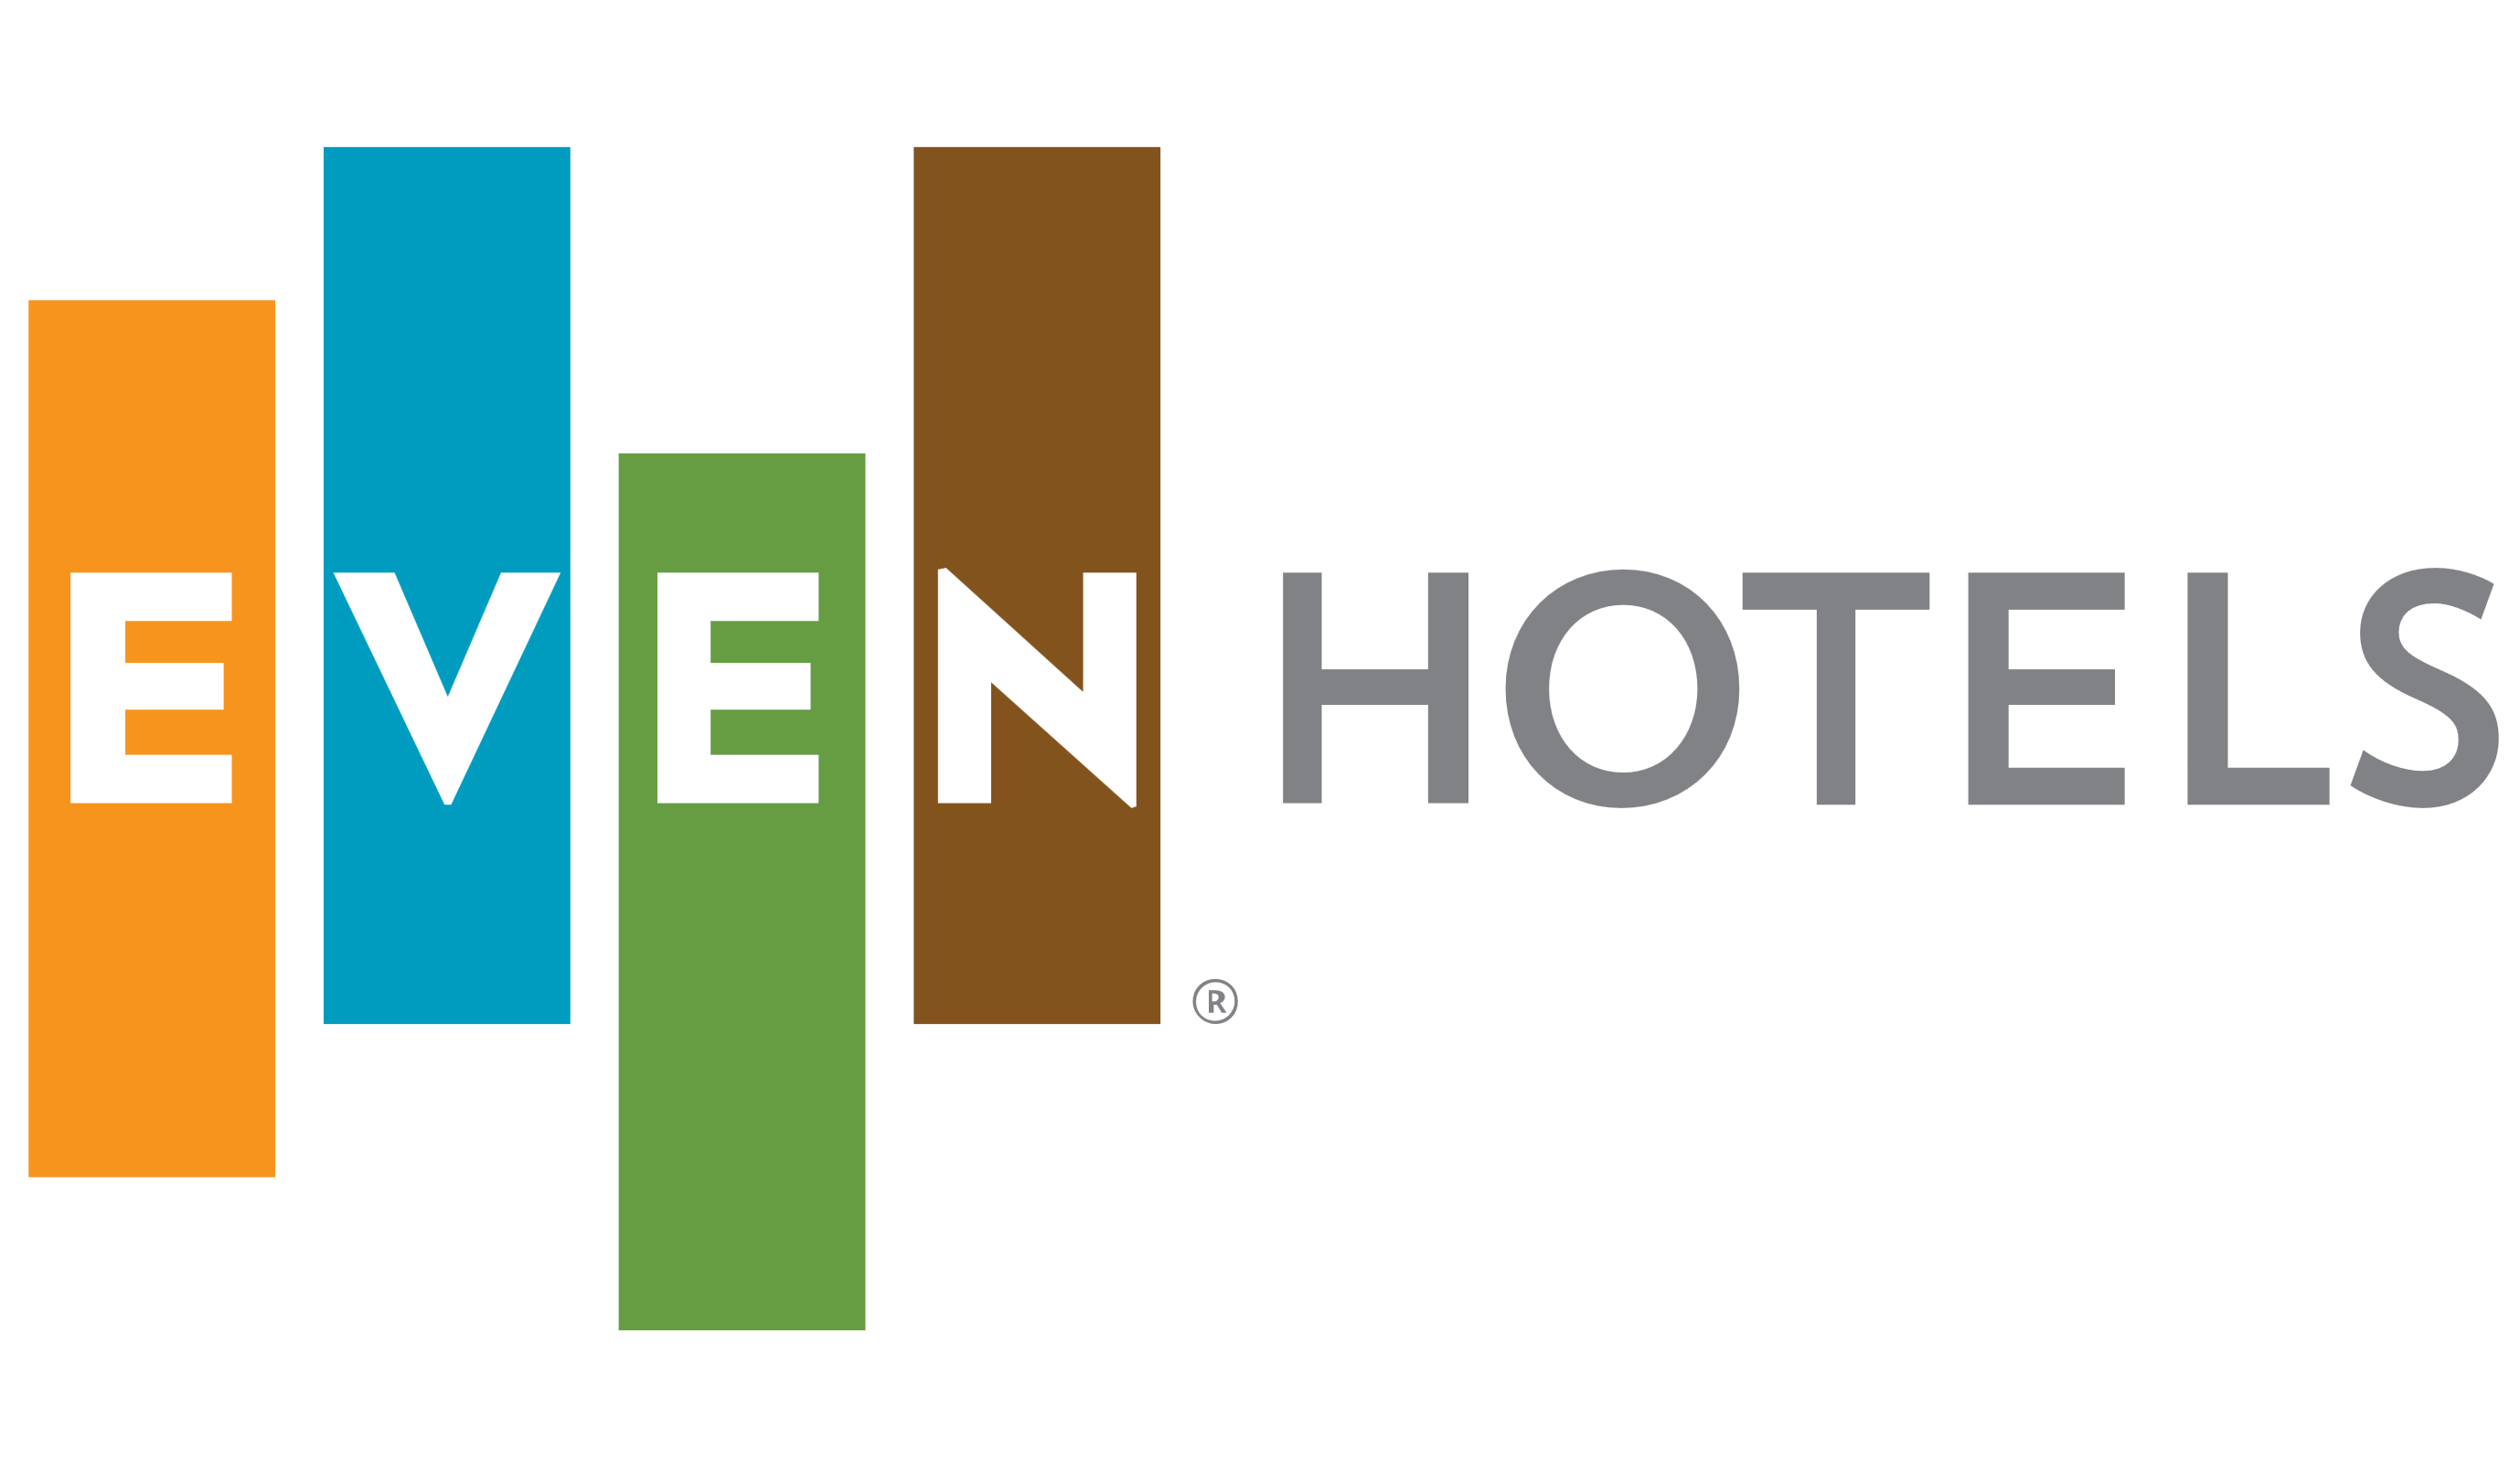 Even Hotels logo, logotype